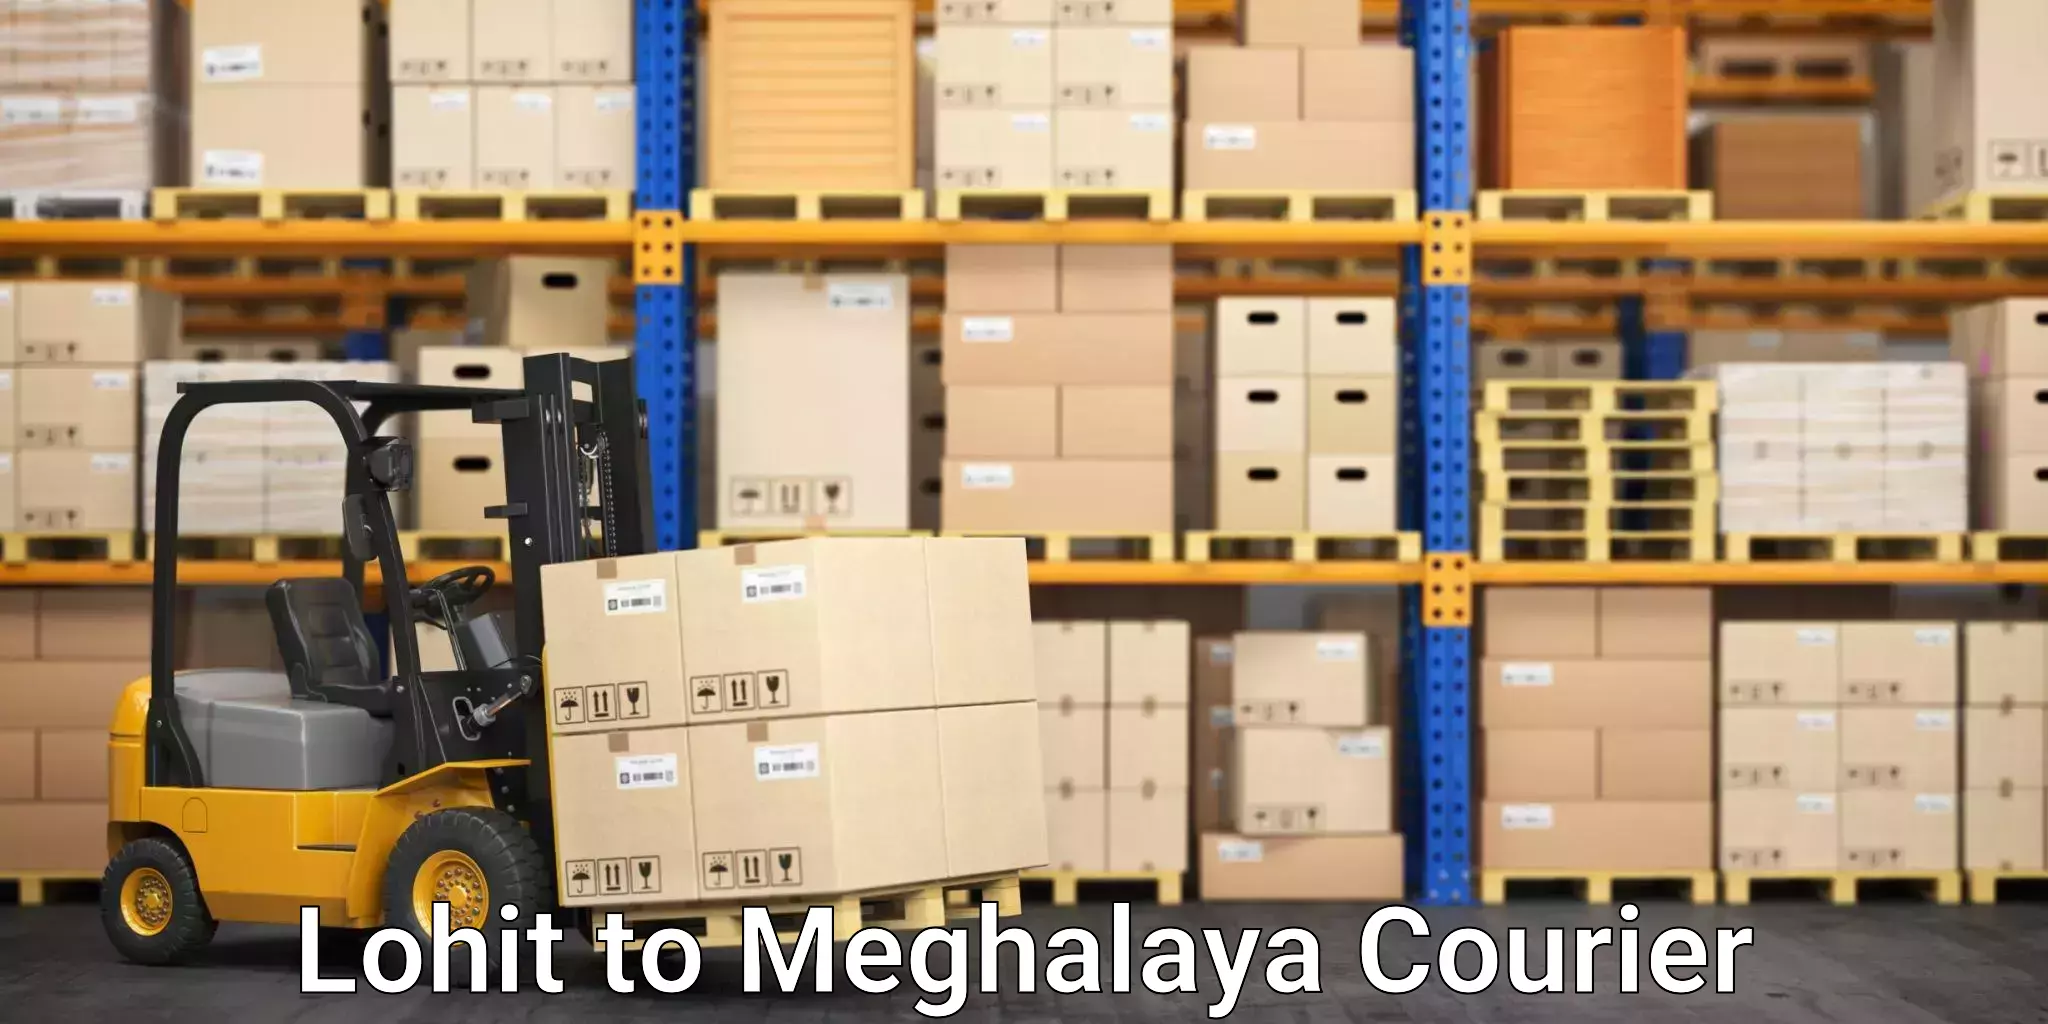 Courier insurance Lohit to Meghalaya